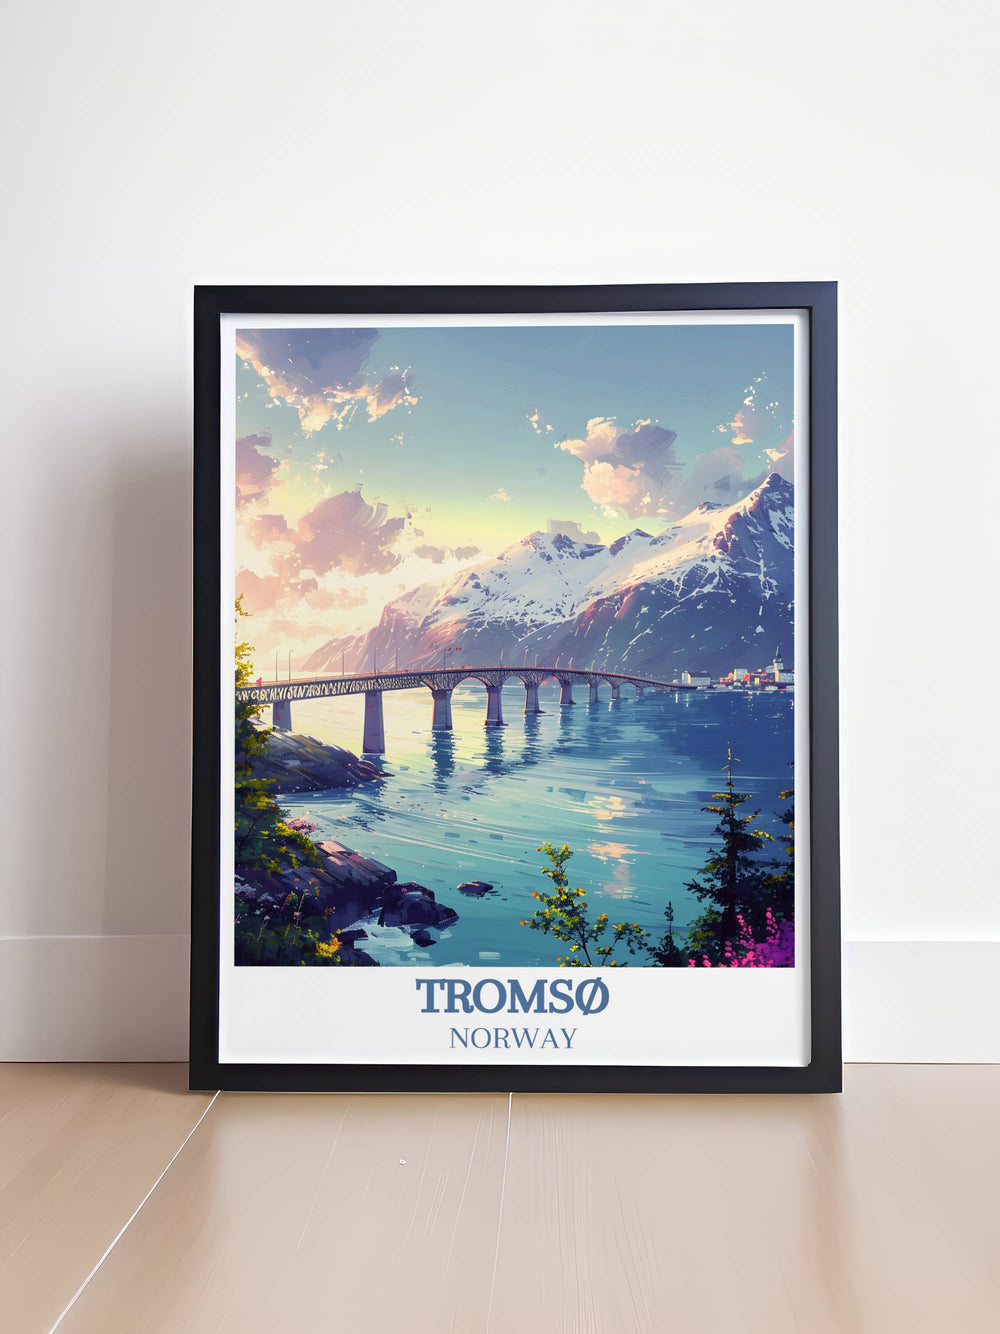 Tromsø Bridge art print featuring the bridges elegant curves set against the breathtaking fjords and mountains of Tromsø. A picturesque scene that epitomizes Norways natural splendor.